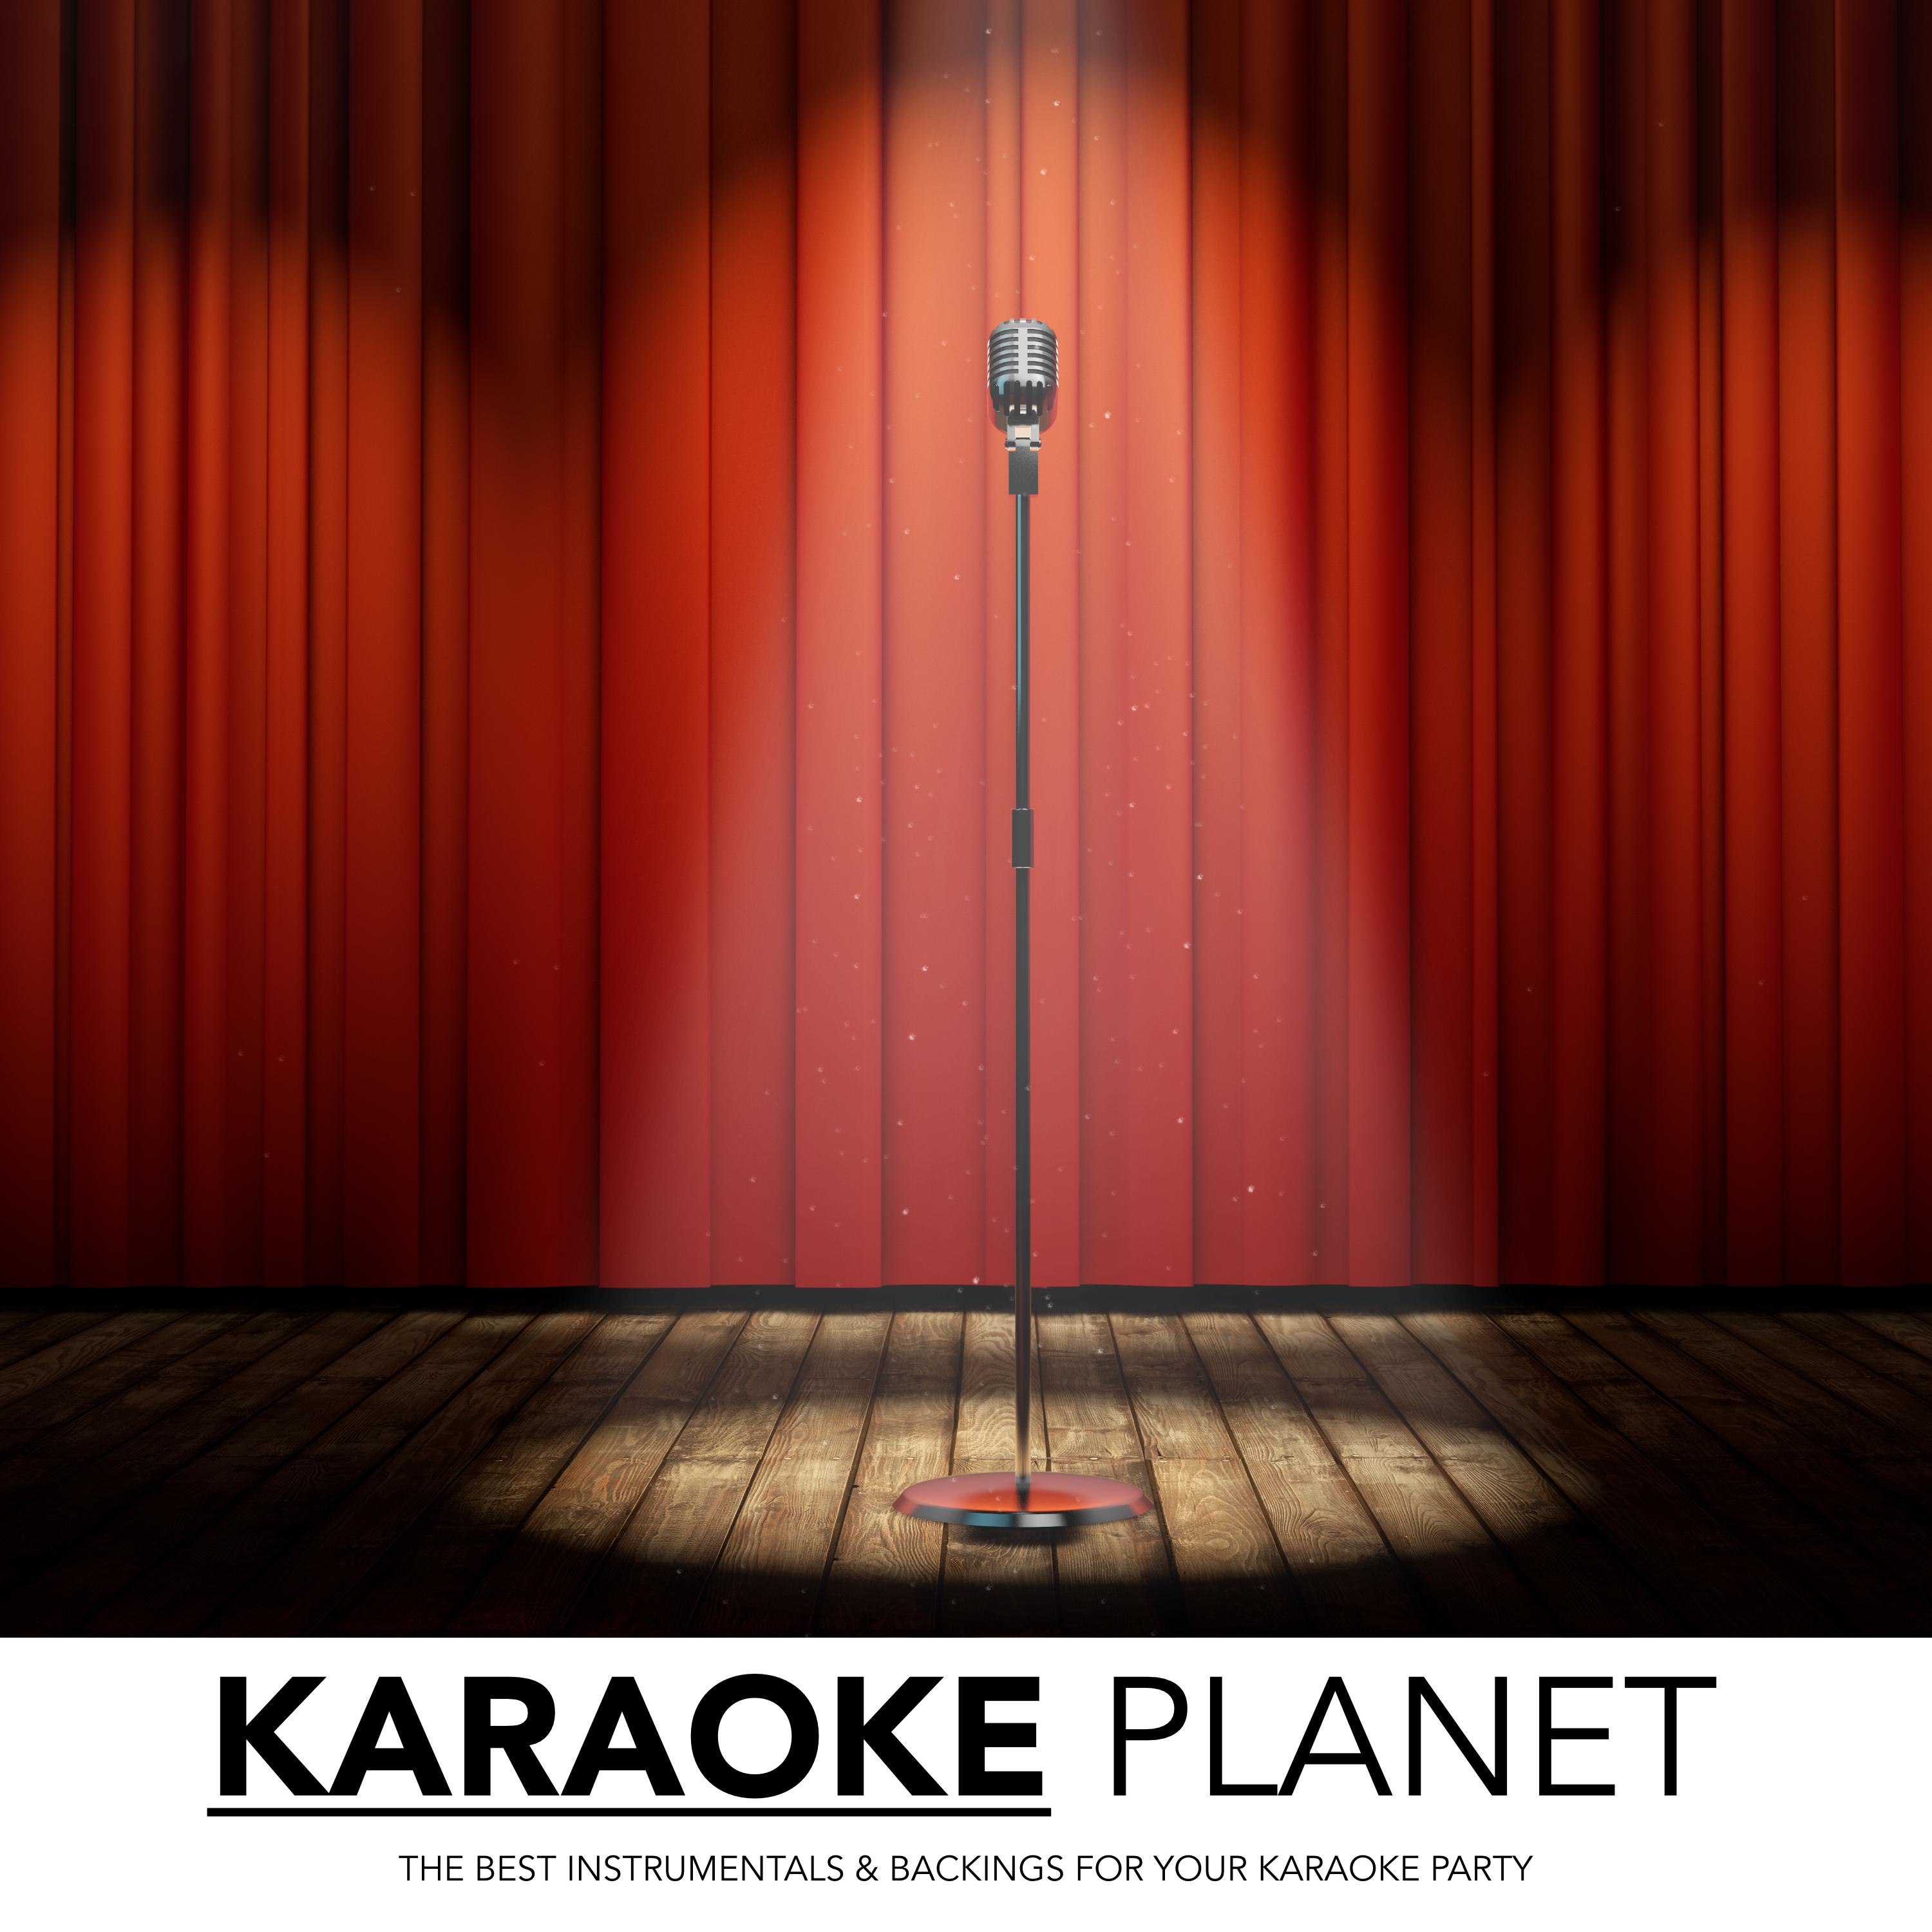 Original Sin (Karaoke Version) [Originally Performed By Elton John]